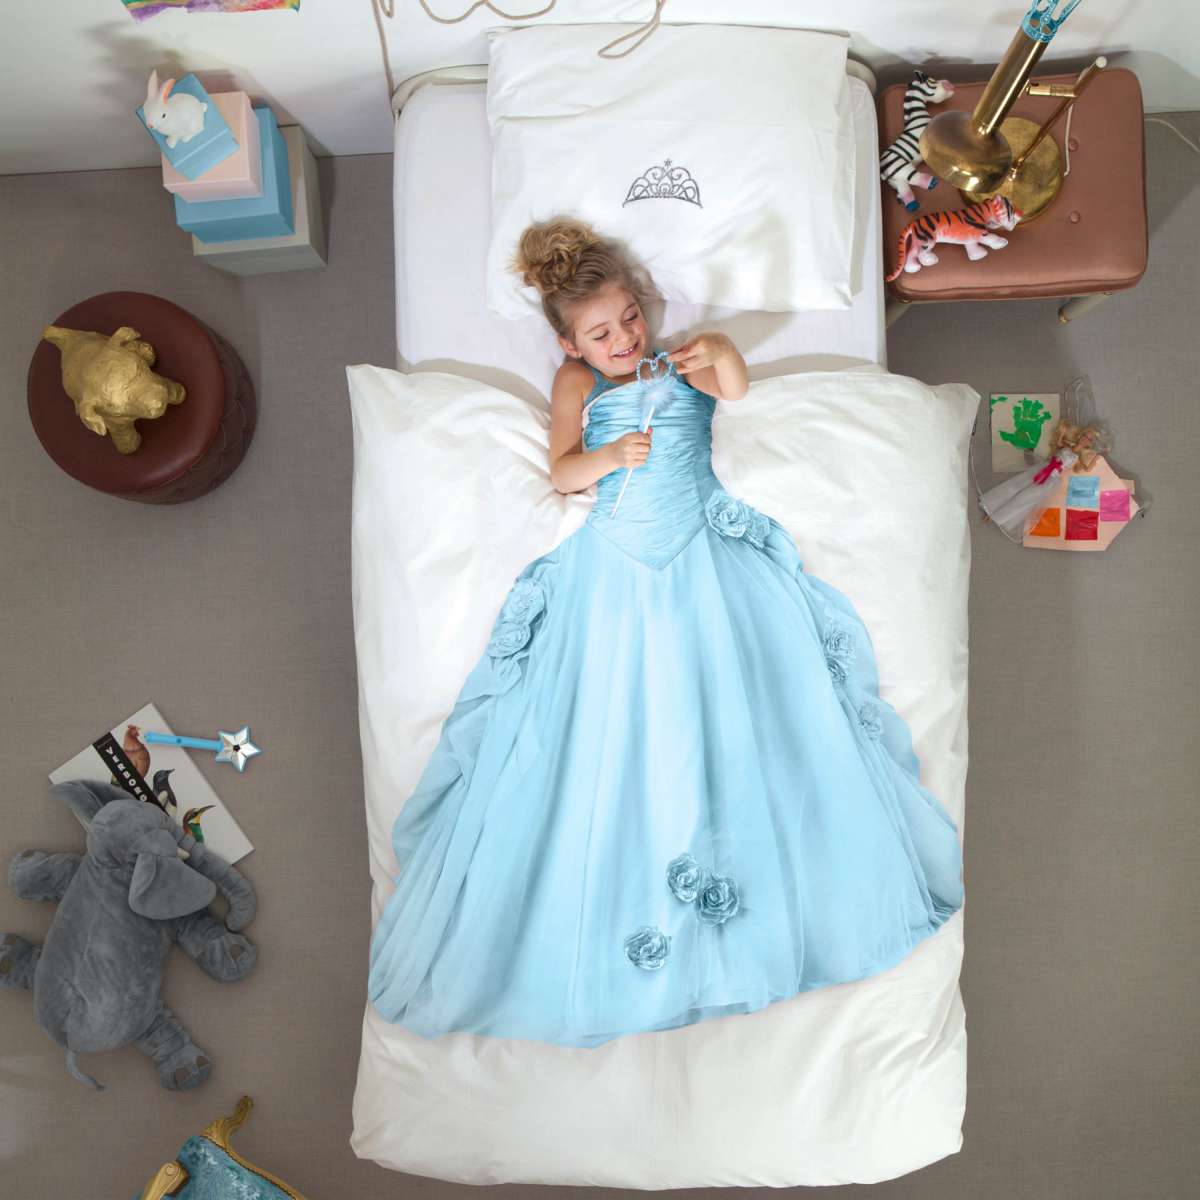 Kinderdekbedovertrek SNURK blauwe prinsessenjurk